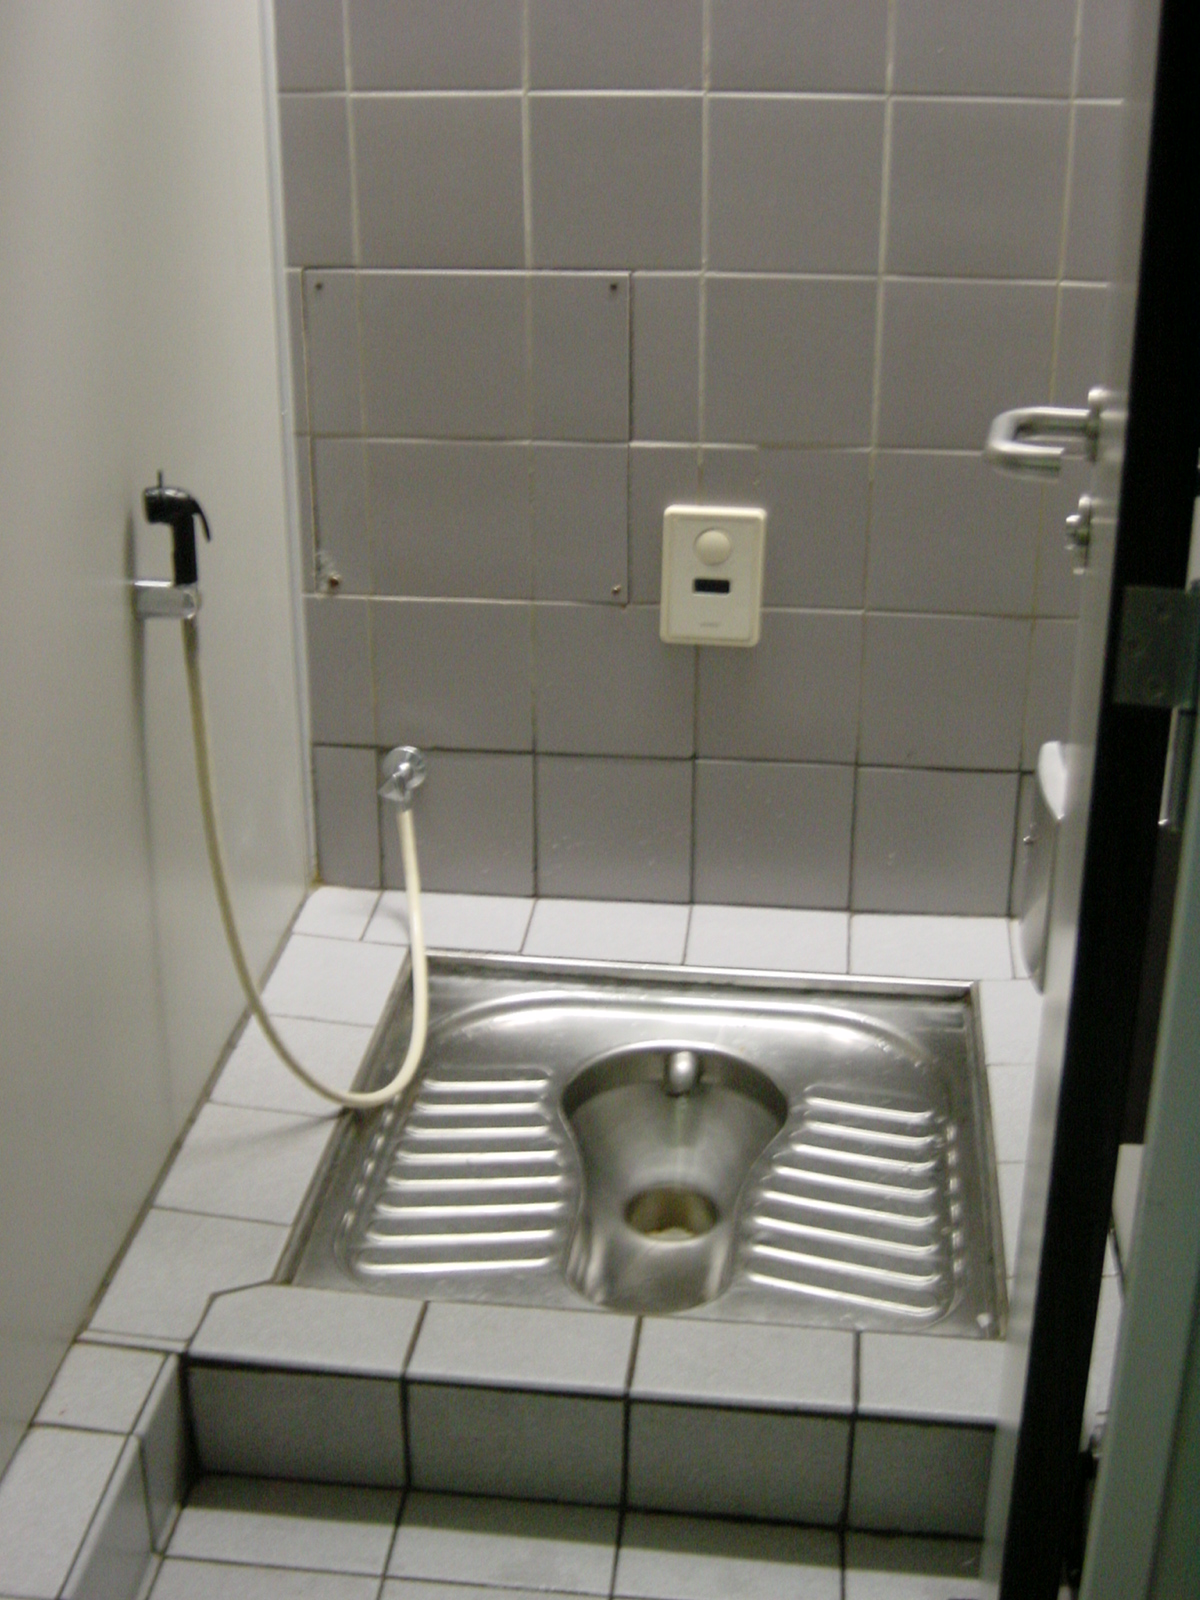 toilet seats for sale dubai Toilet dubai airport file commons wikimedia